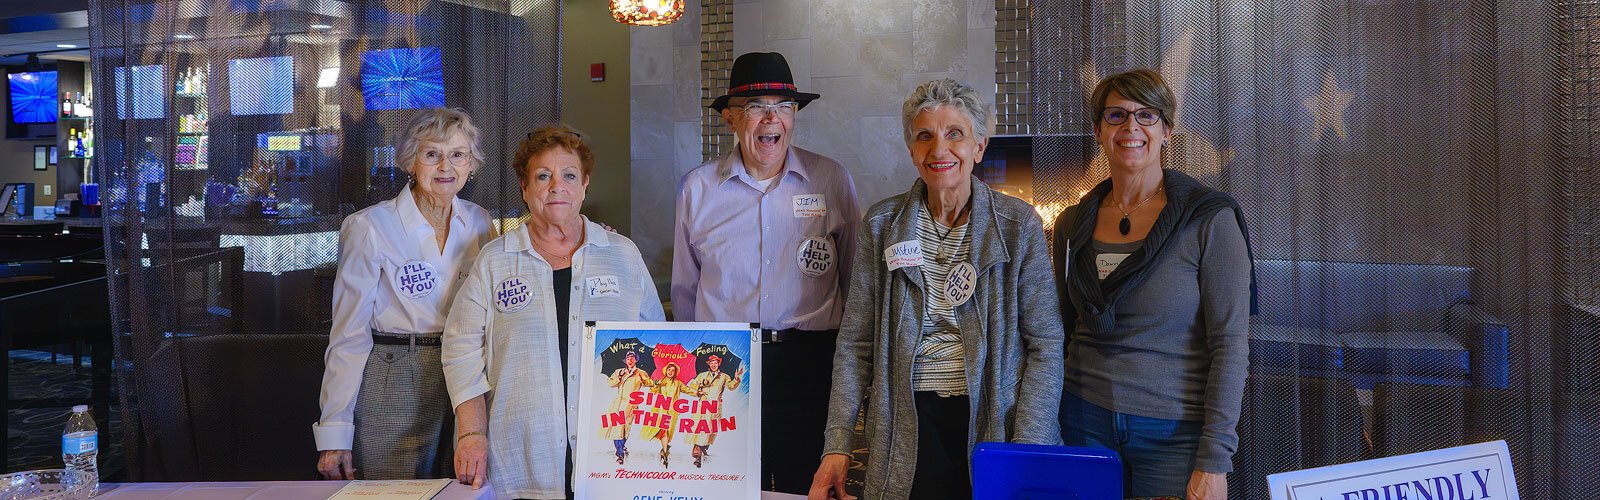 Jim Mangi (center) with volunteers at a dementia-friendly screening of "Singin' in the Rain" at Emagine Saline.